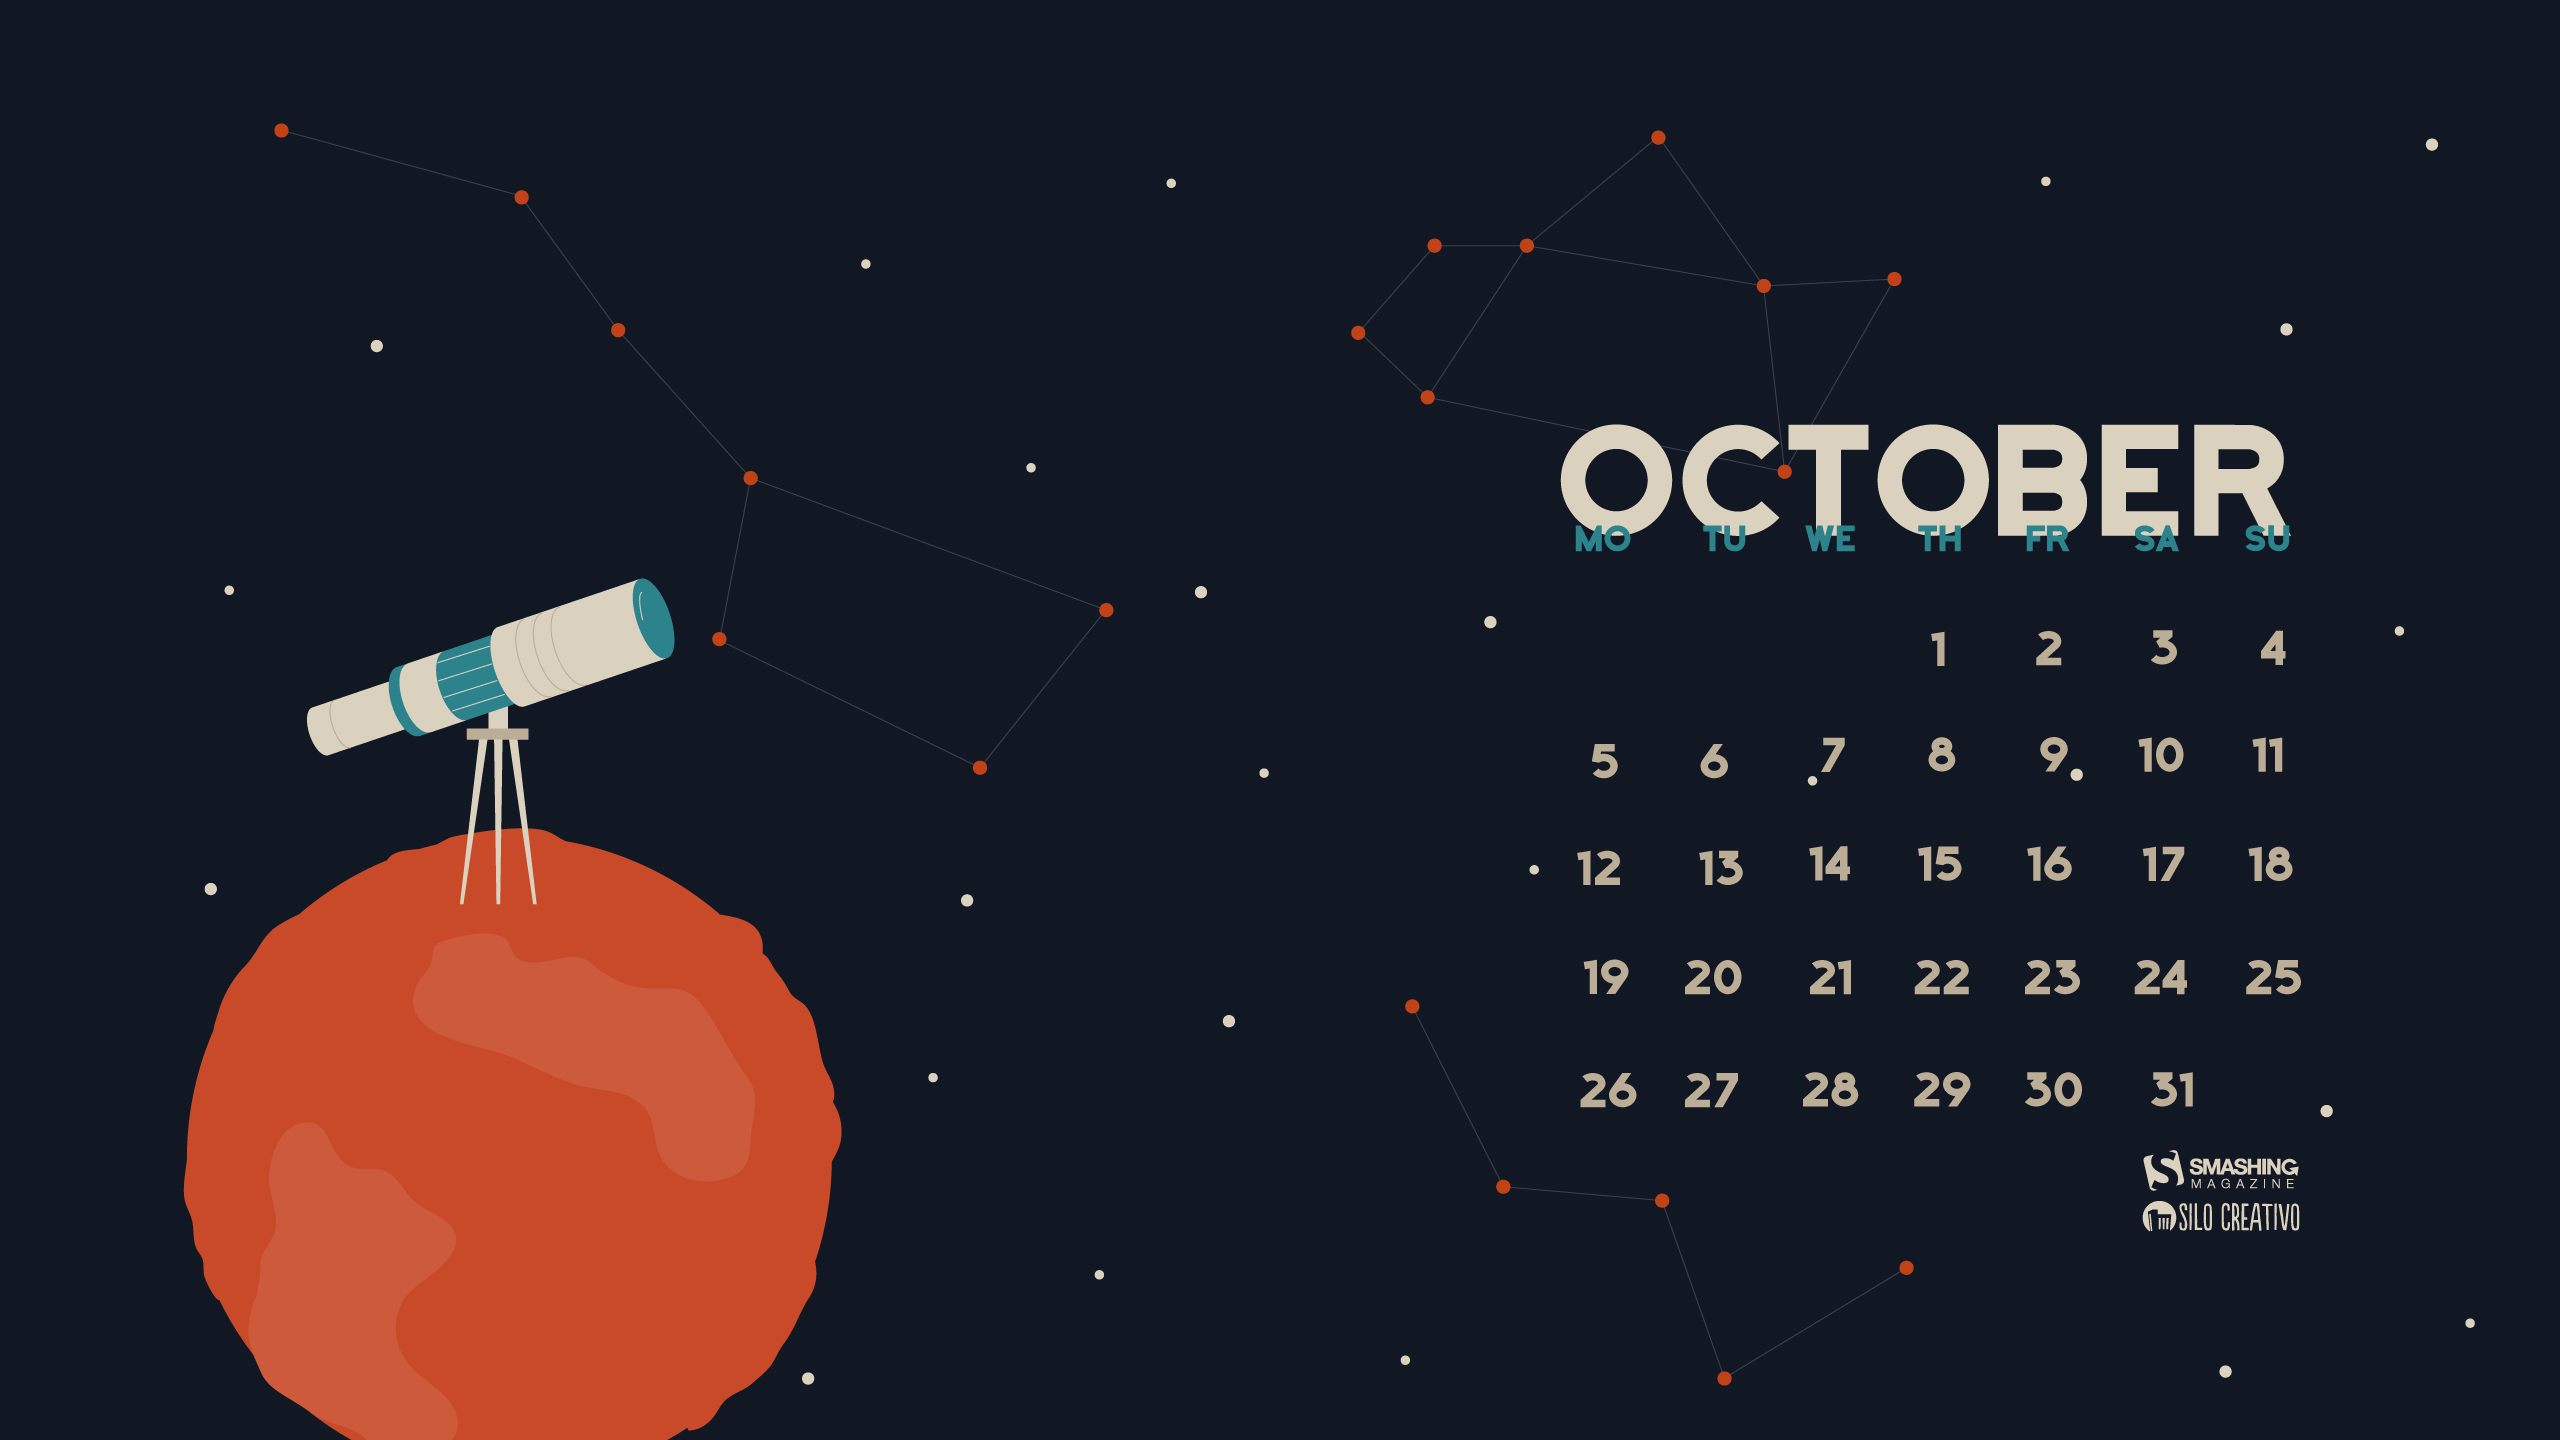 Desktop Wallpaper Calendars October Smashing Magazine